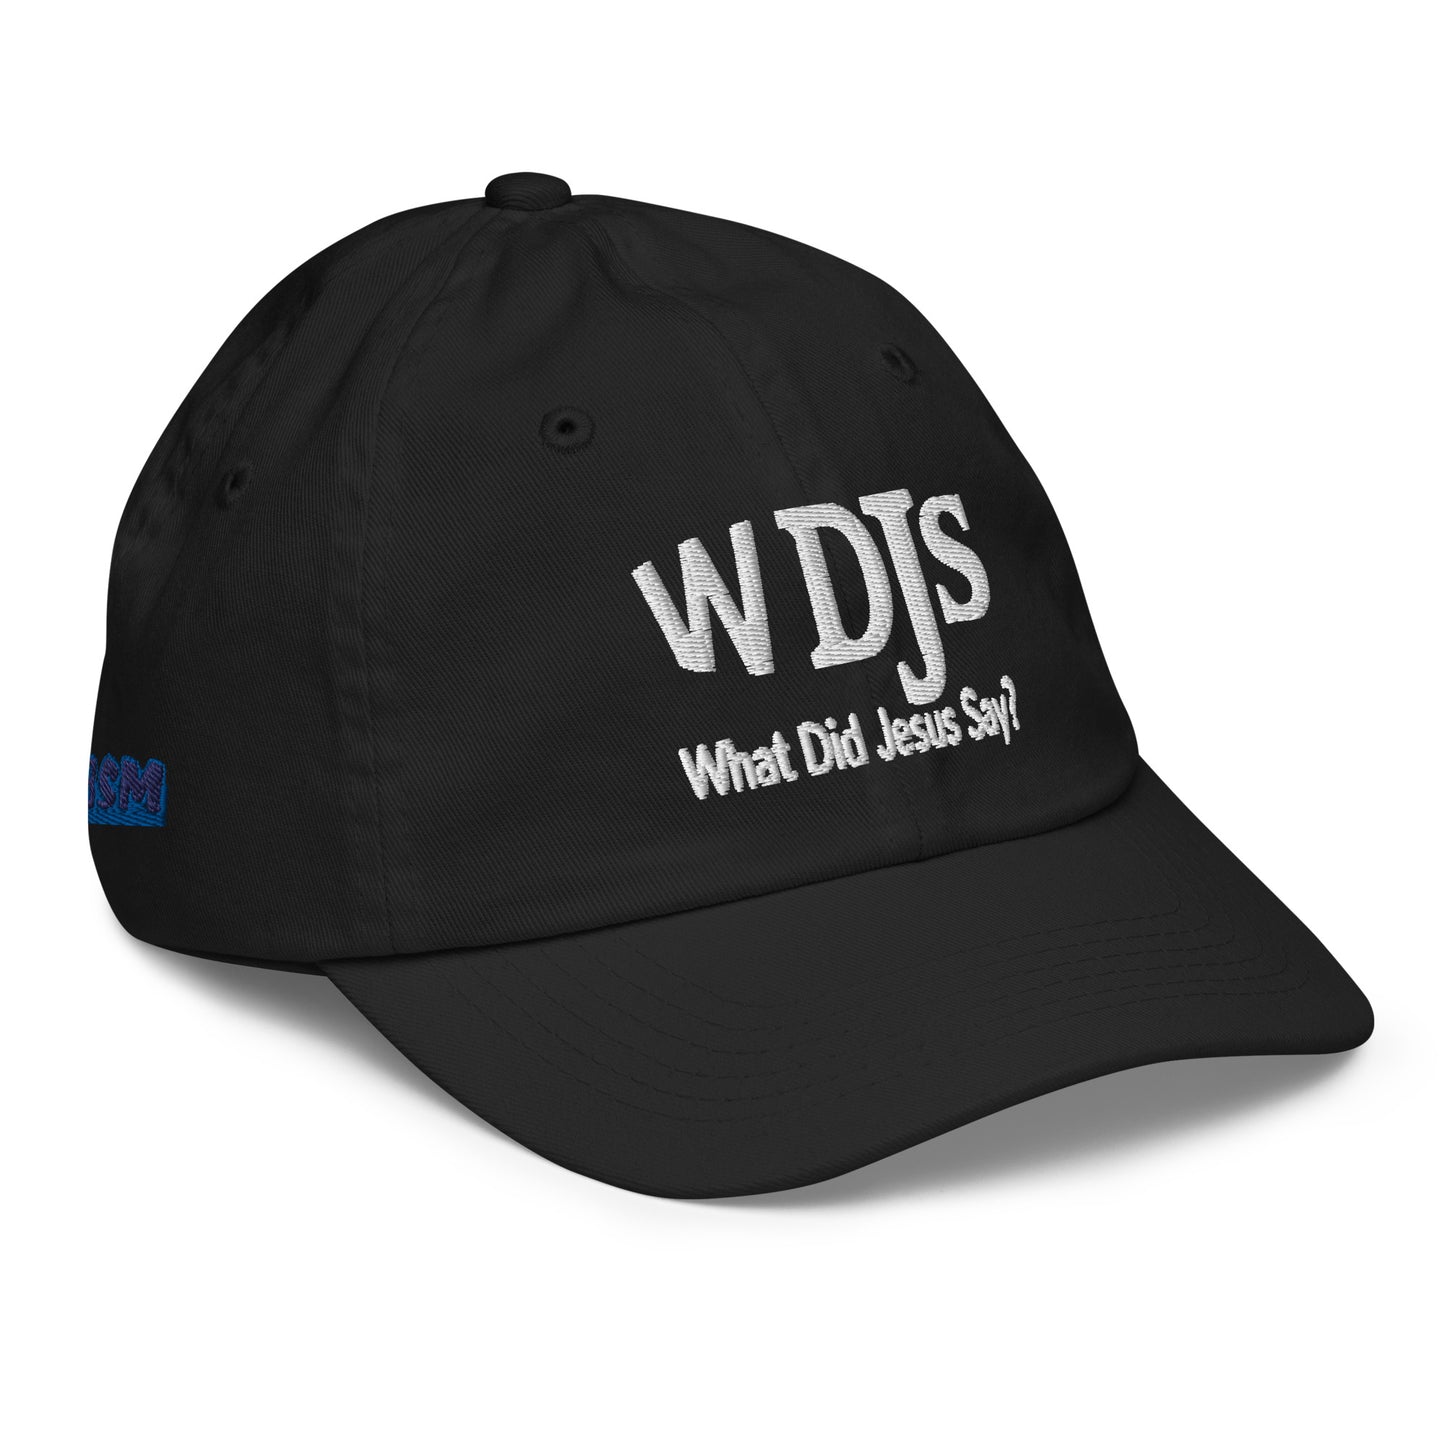 WDJS What Did Jesus Say Youth Baseball Cap